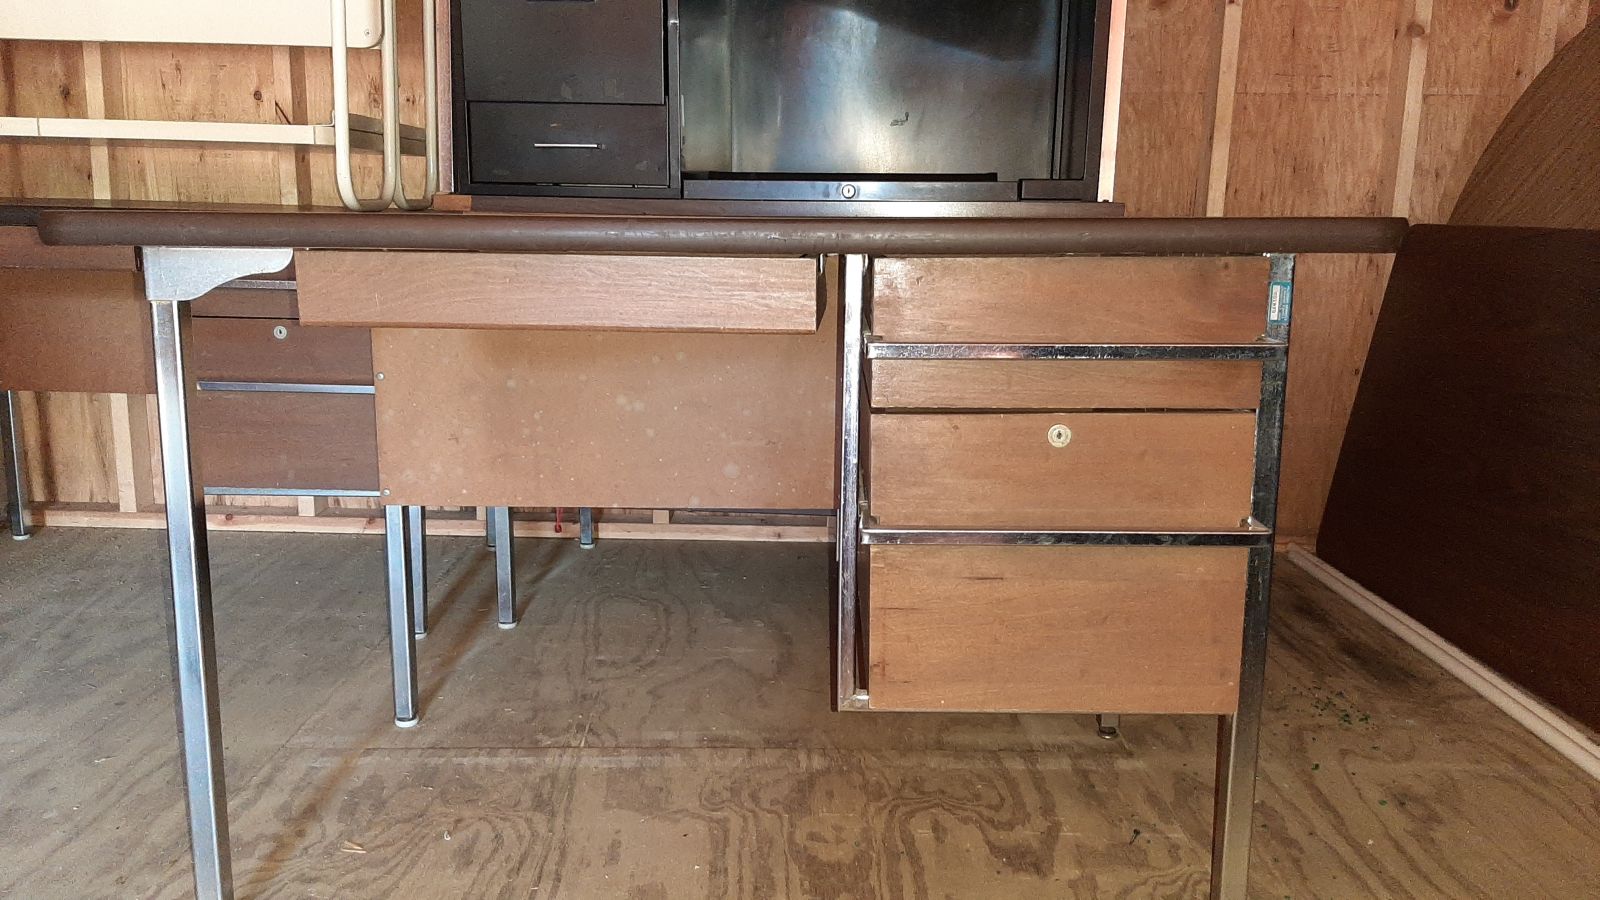 3-drawer metal and wood desk